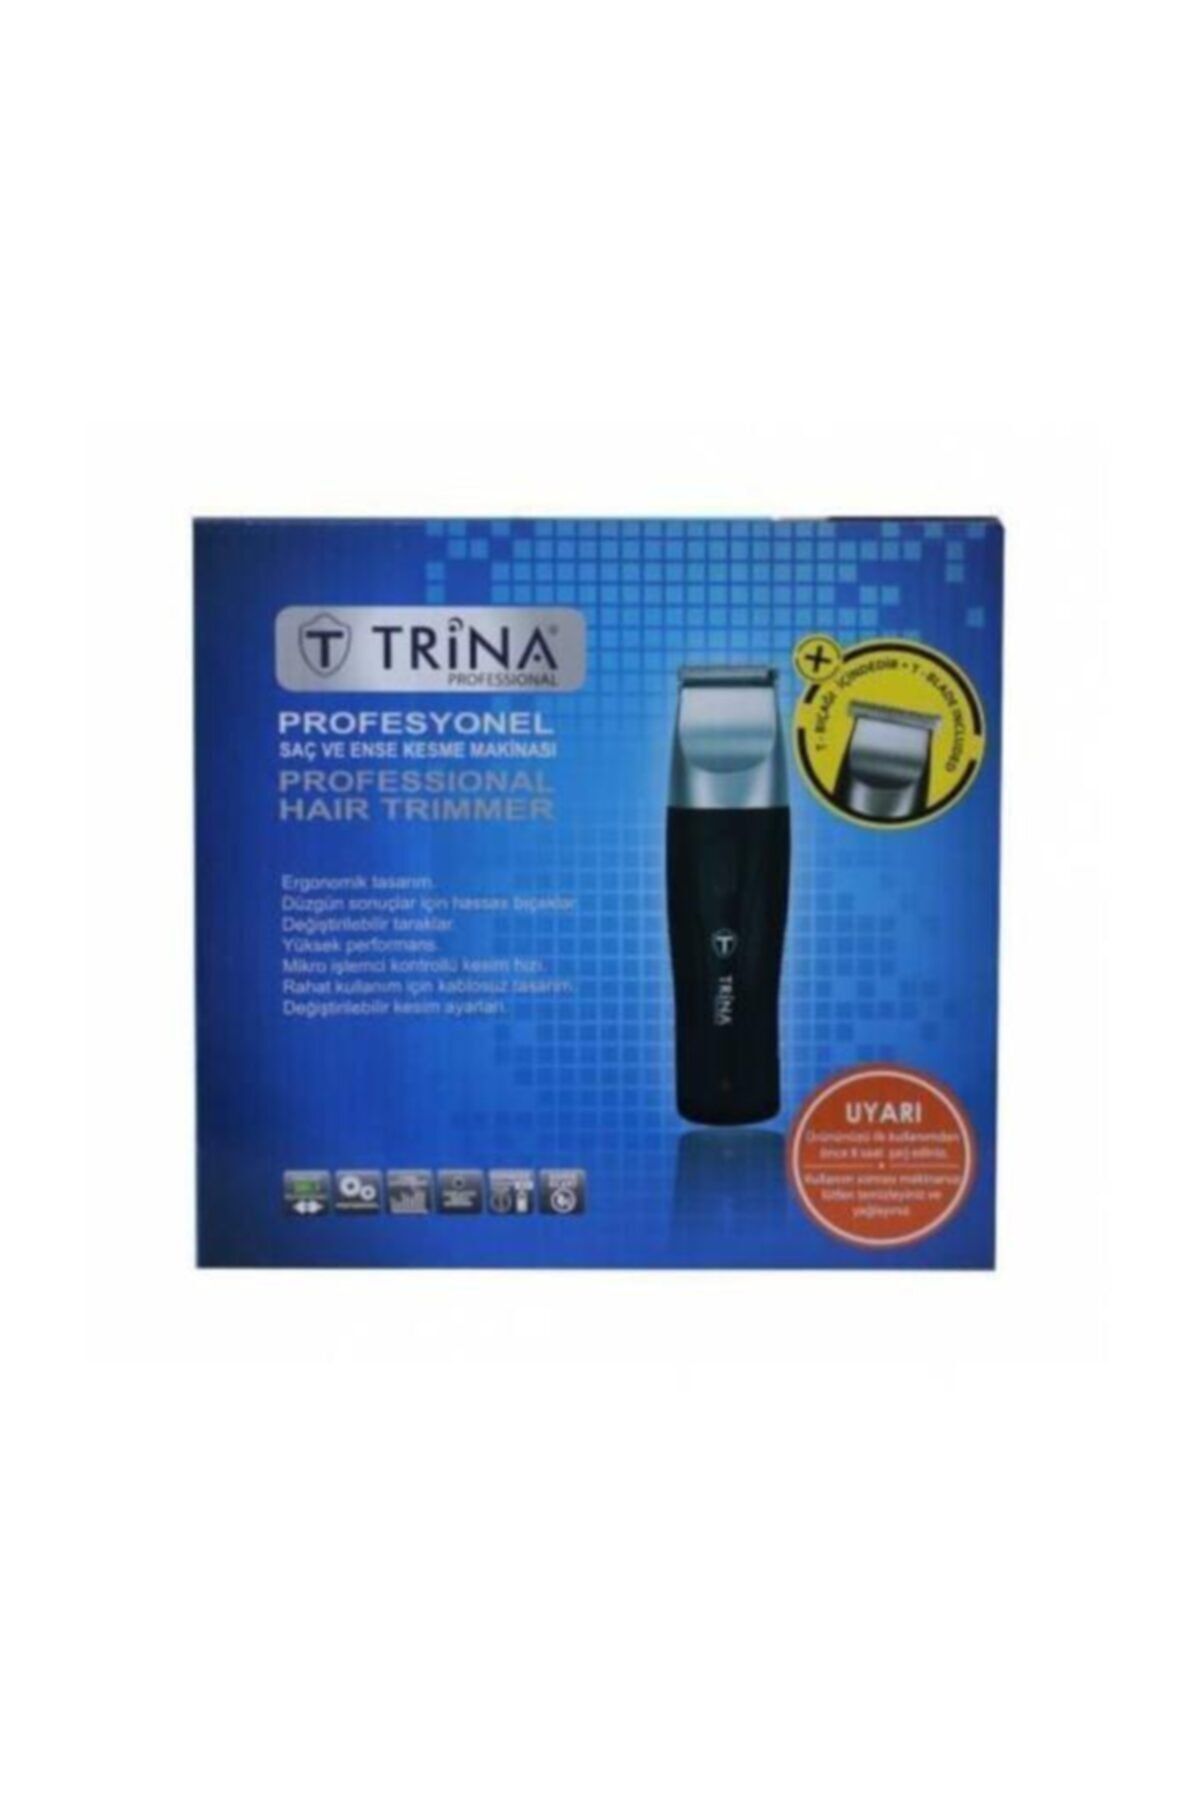 Trina Profesyonel Saç Ve Ense Kesme Makinası Trnsacks0014